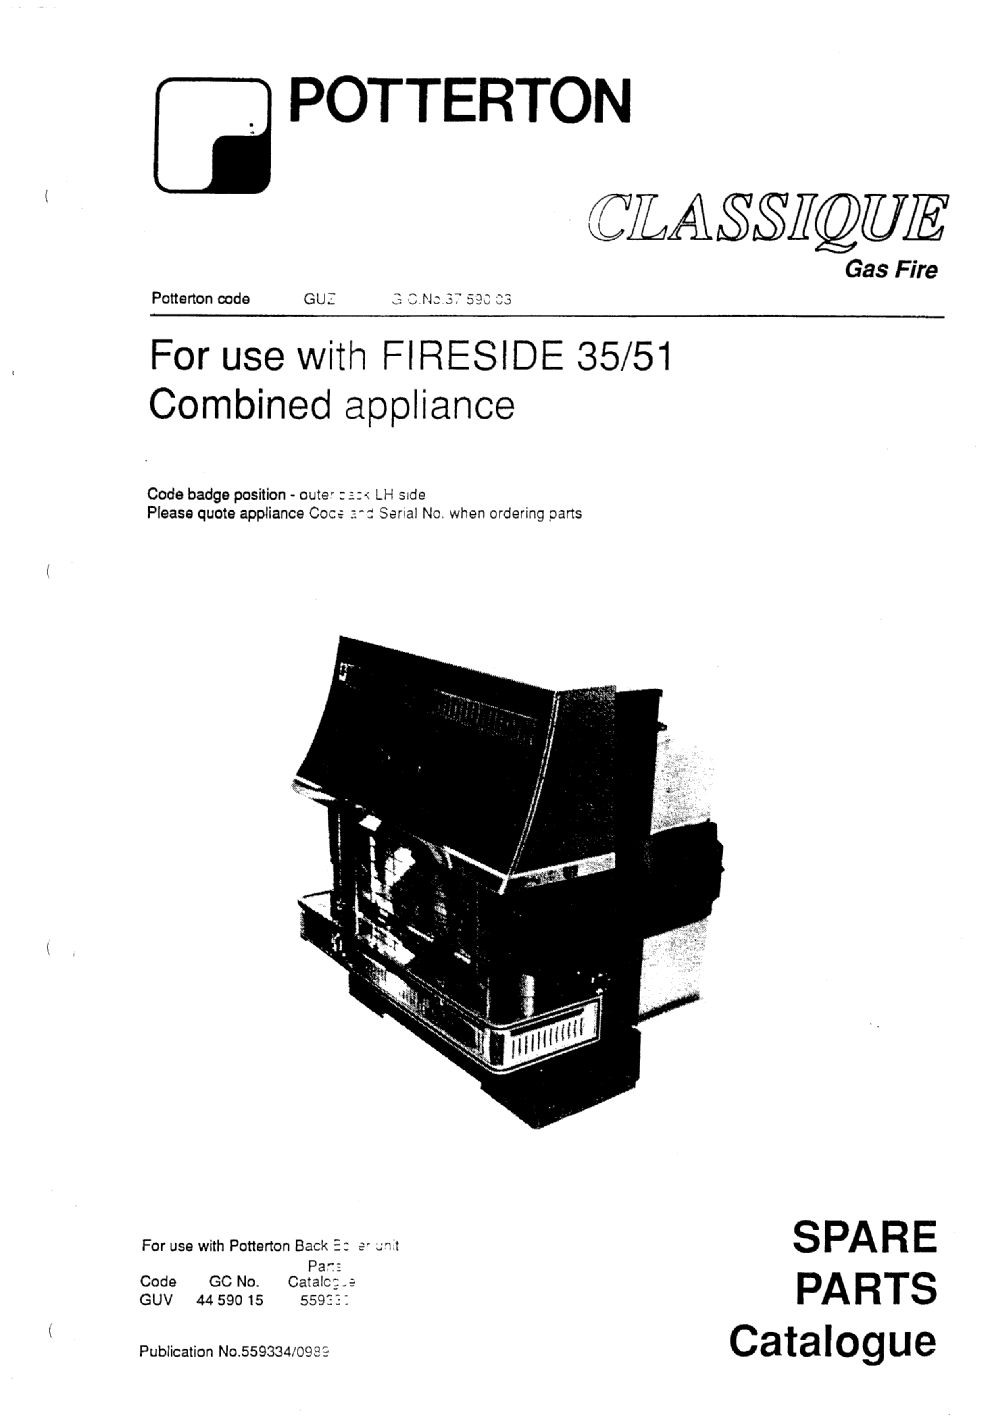 Firesize 35/51 Classique Fire - appliance_4242